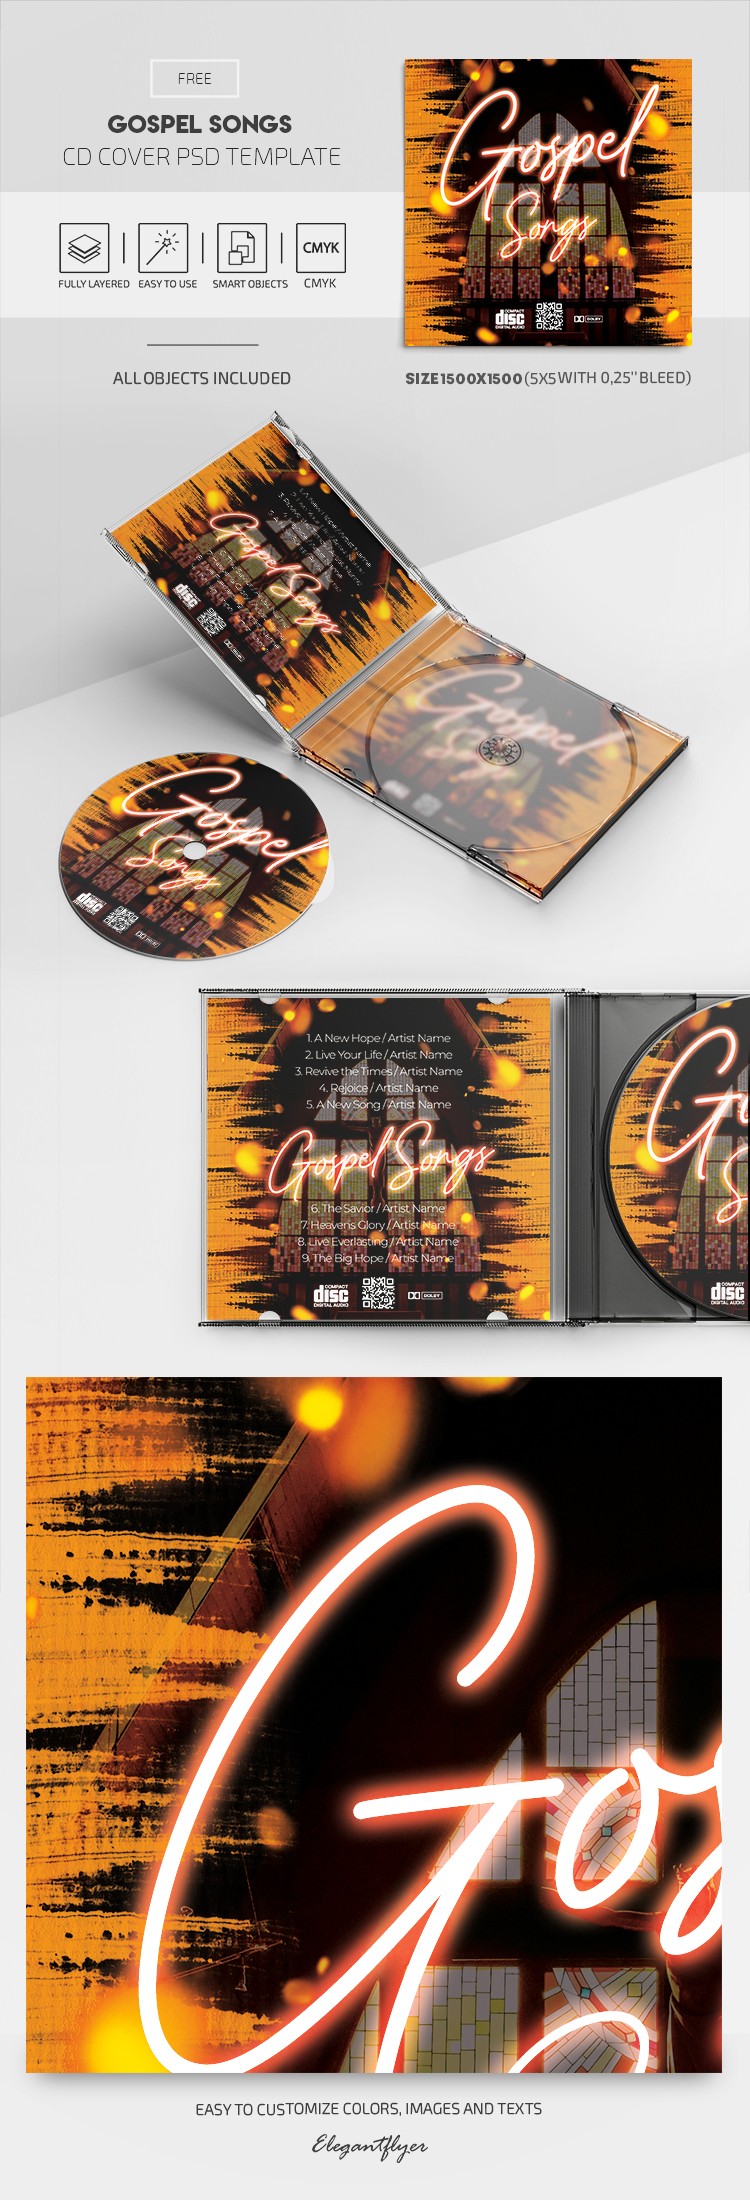 Gospel Songs Okładka CD by ElegantFlyer